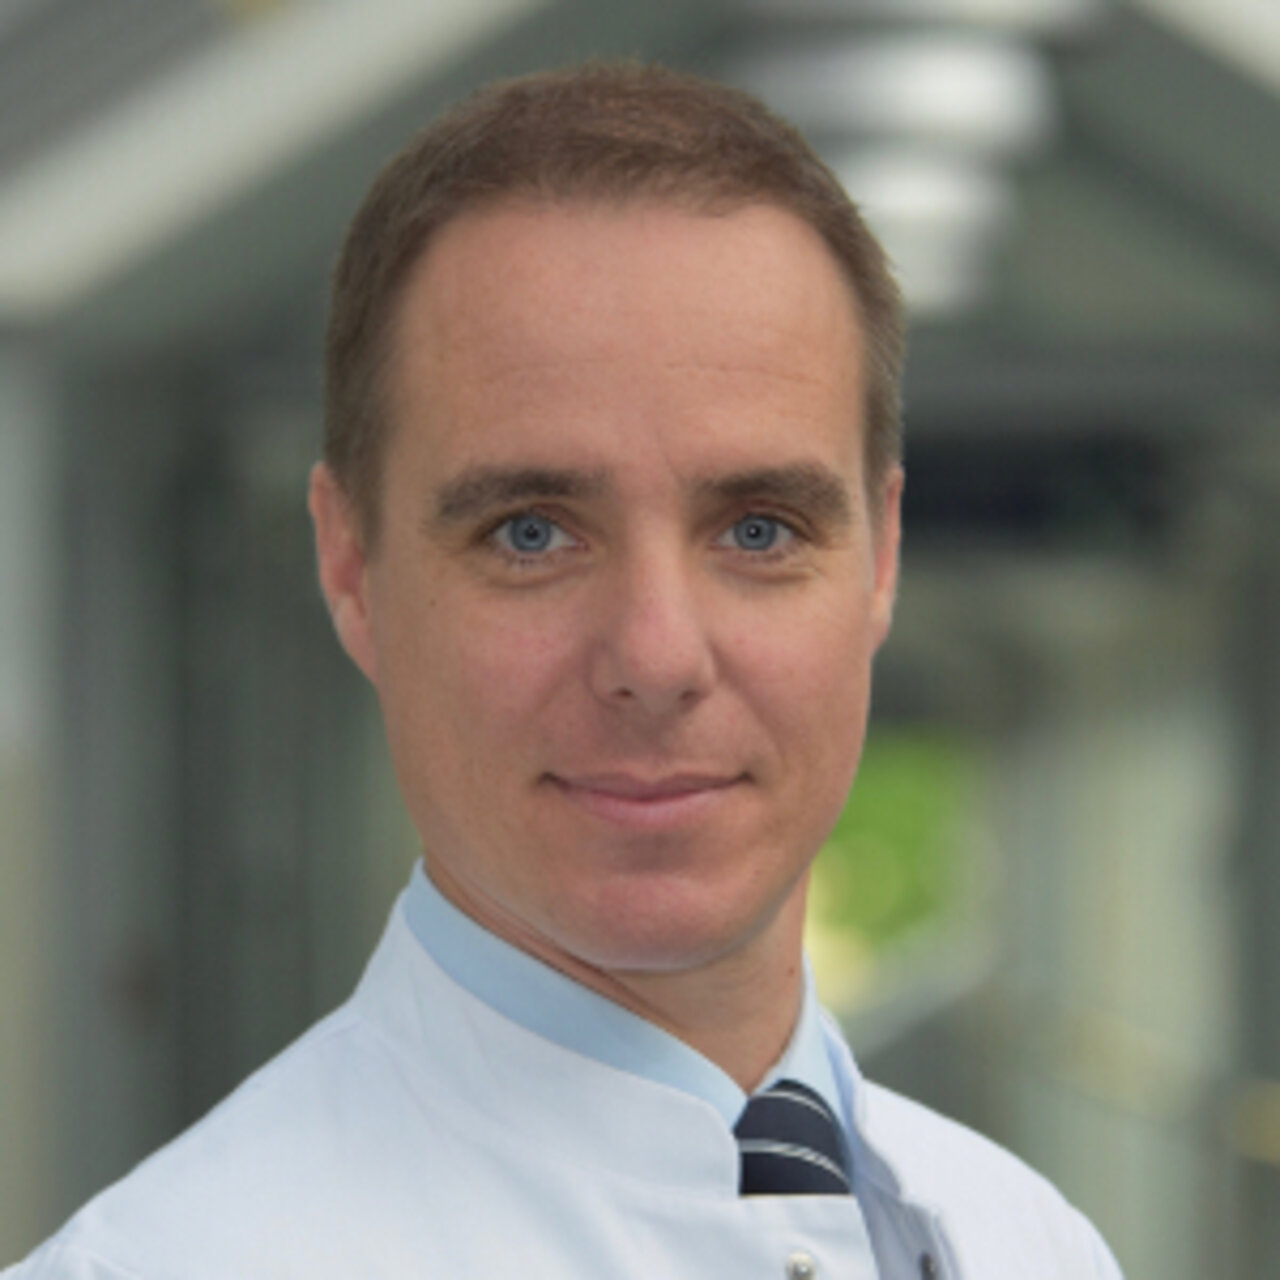 Dr Jan Martin Beron -  Specialist in Thoracic Surgery - Portrait